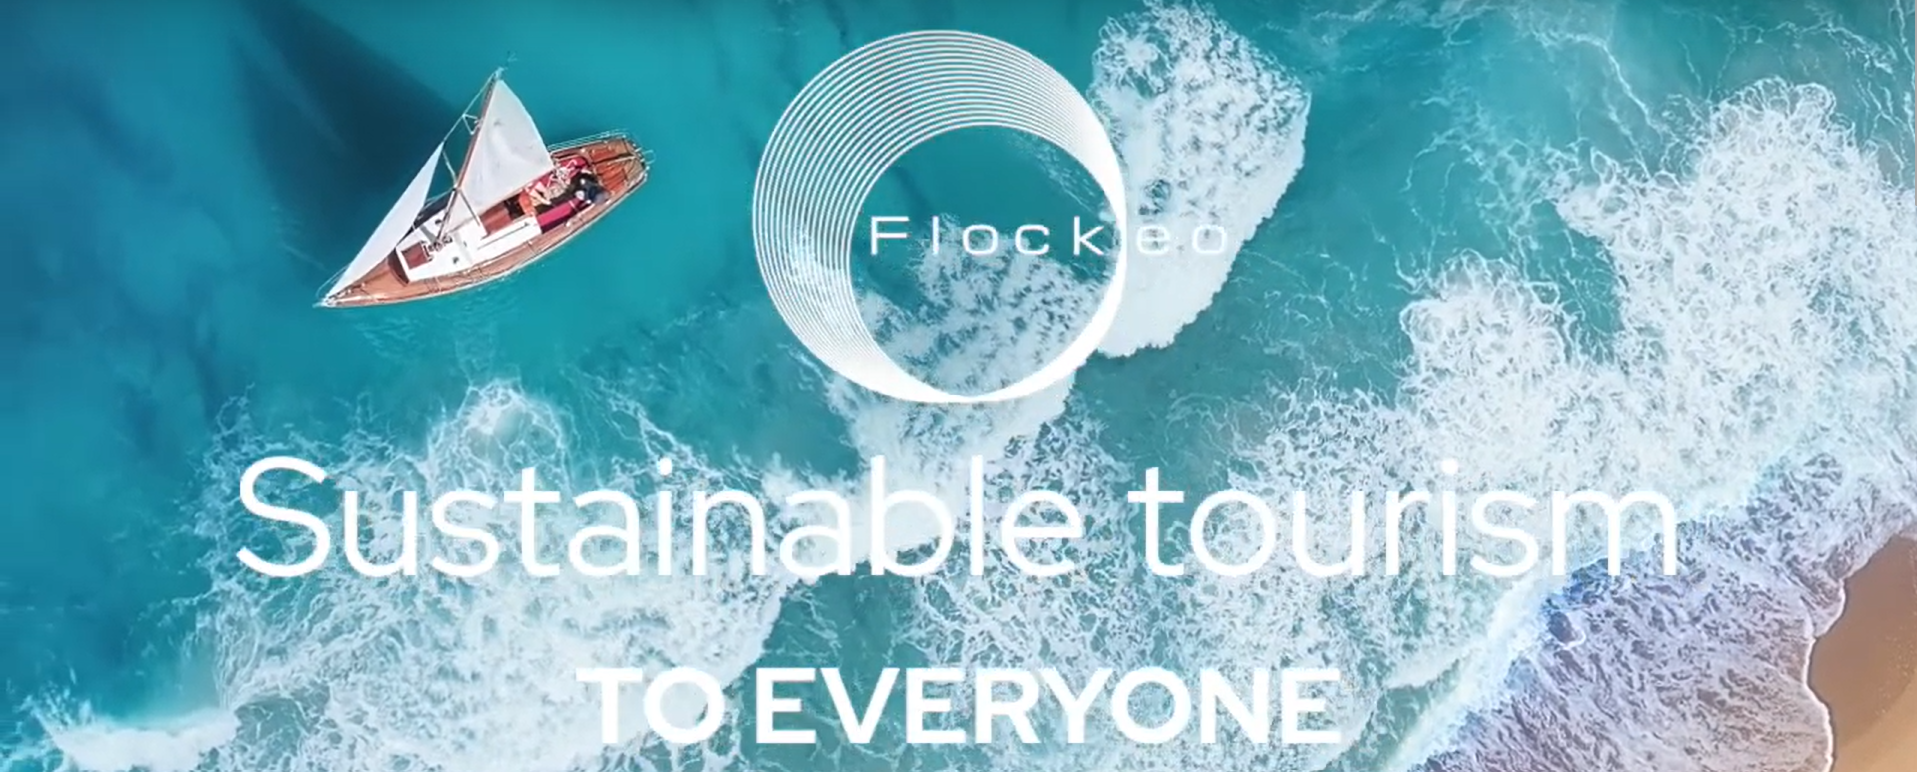 MURMURATION SAS launches FLOCKEO, the community platform dedicated to sustainable tourism